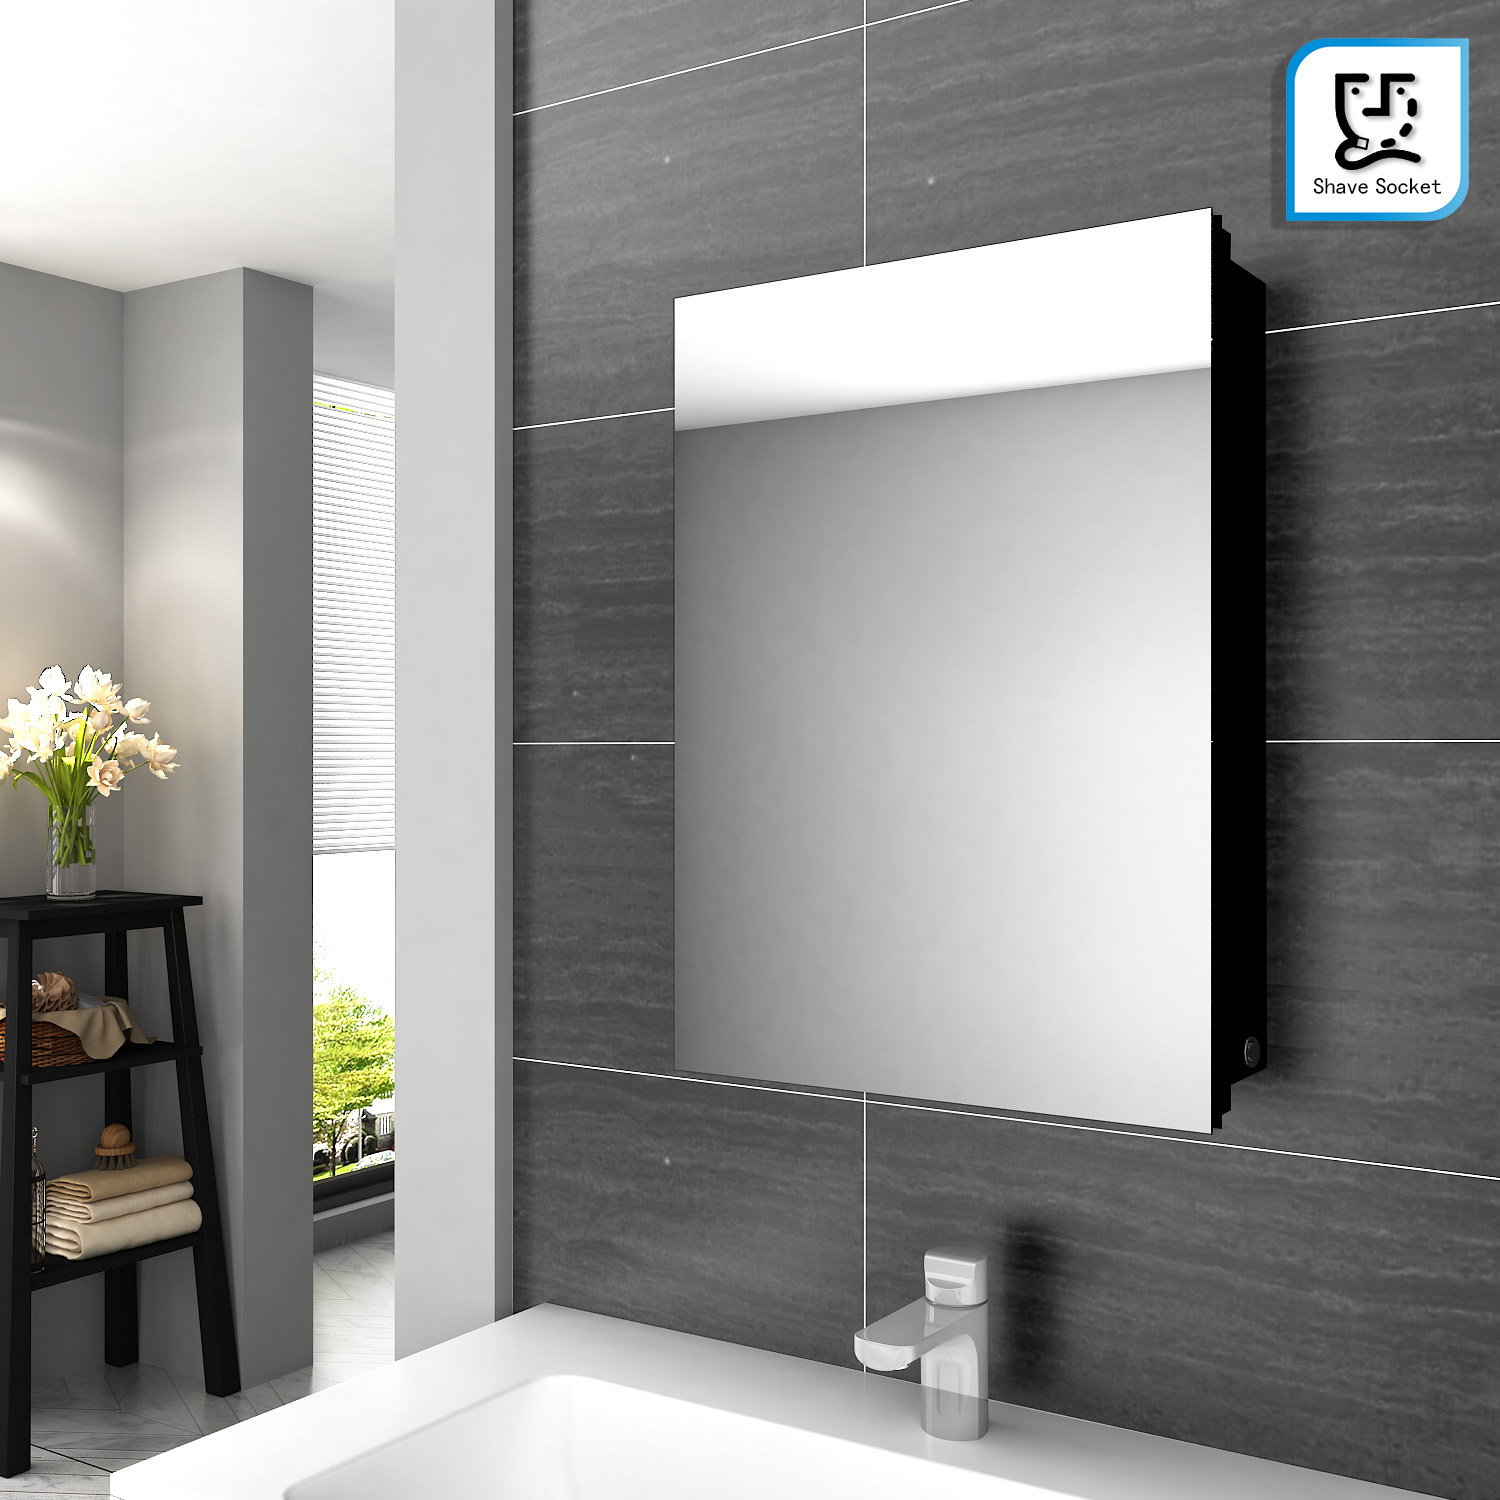 Bathroom Illuminated Led Mirror Cabinet Waterproof With Shaver Socket Ip44 Ebay